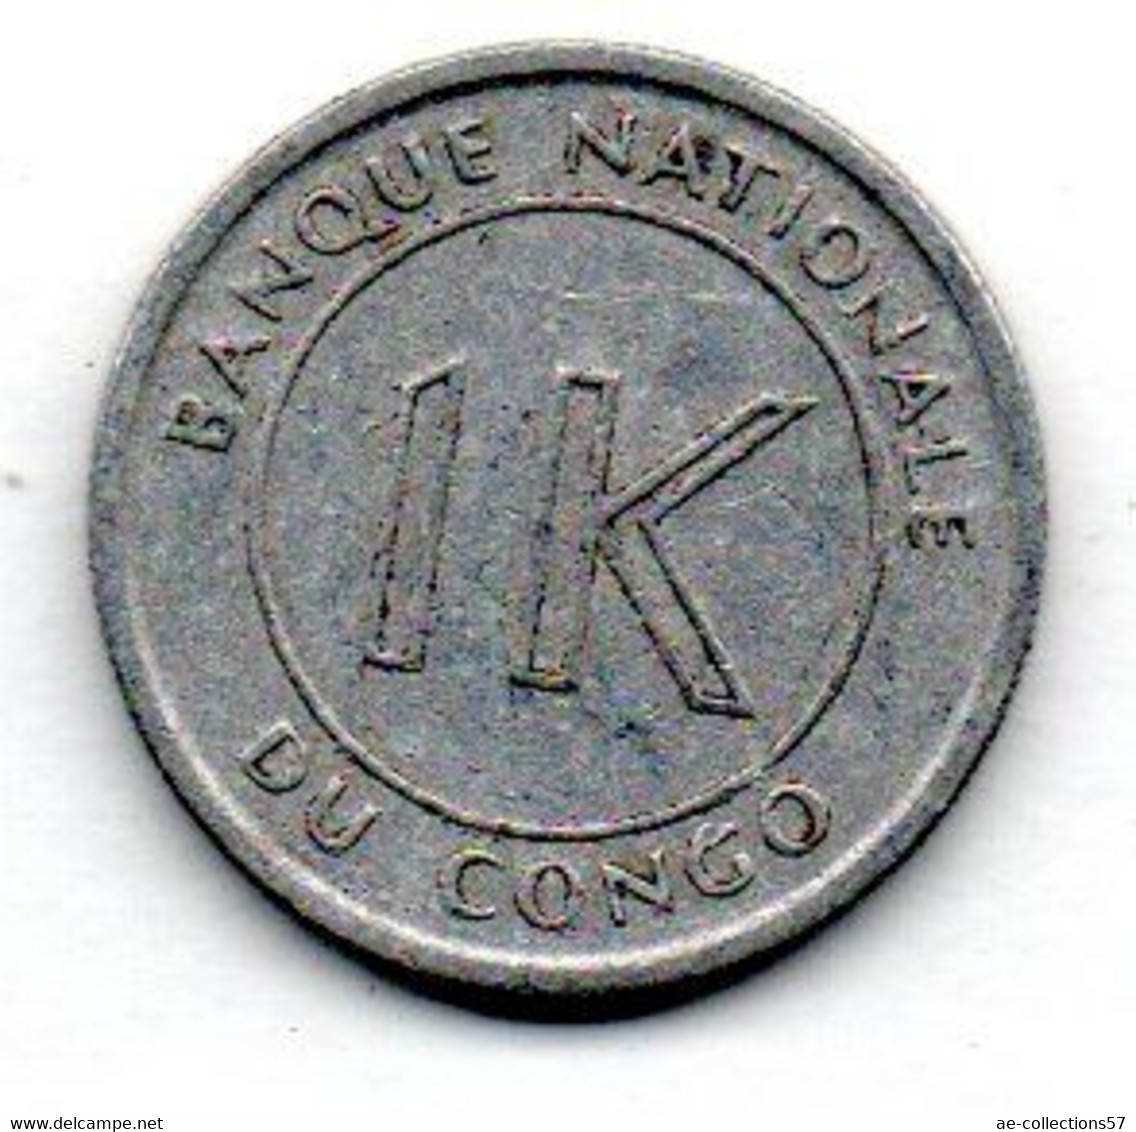 Congo / 1 Likuta 1967 / TTB - Congo (Democratic Republic 1964-70)